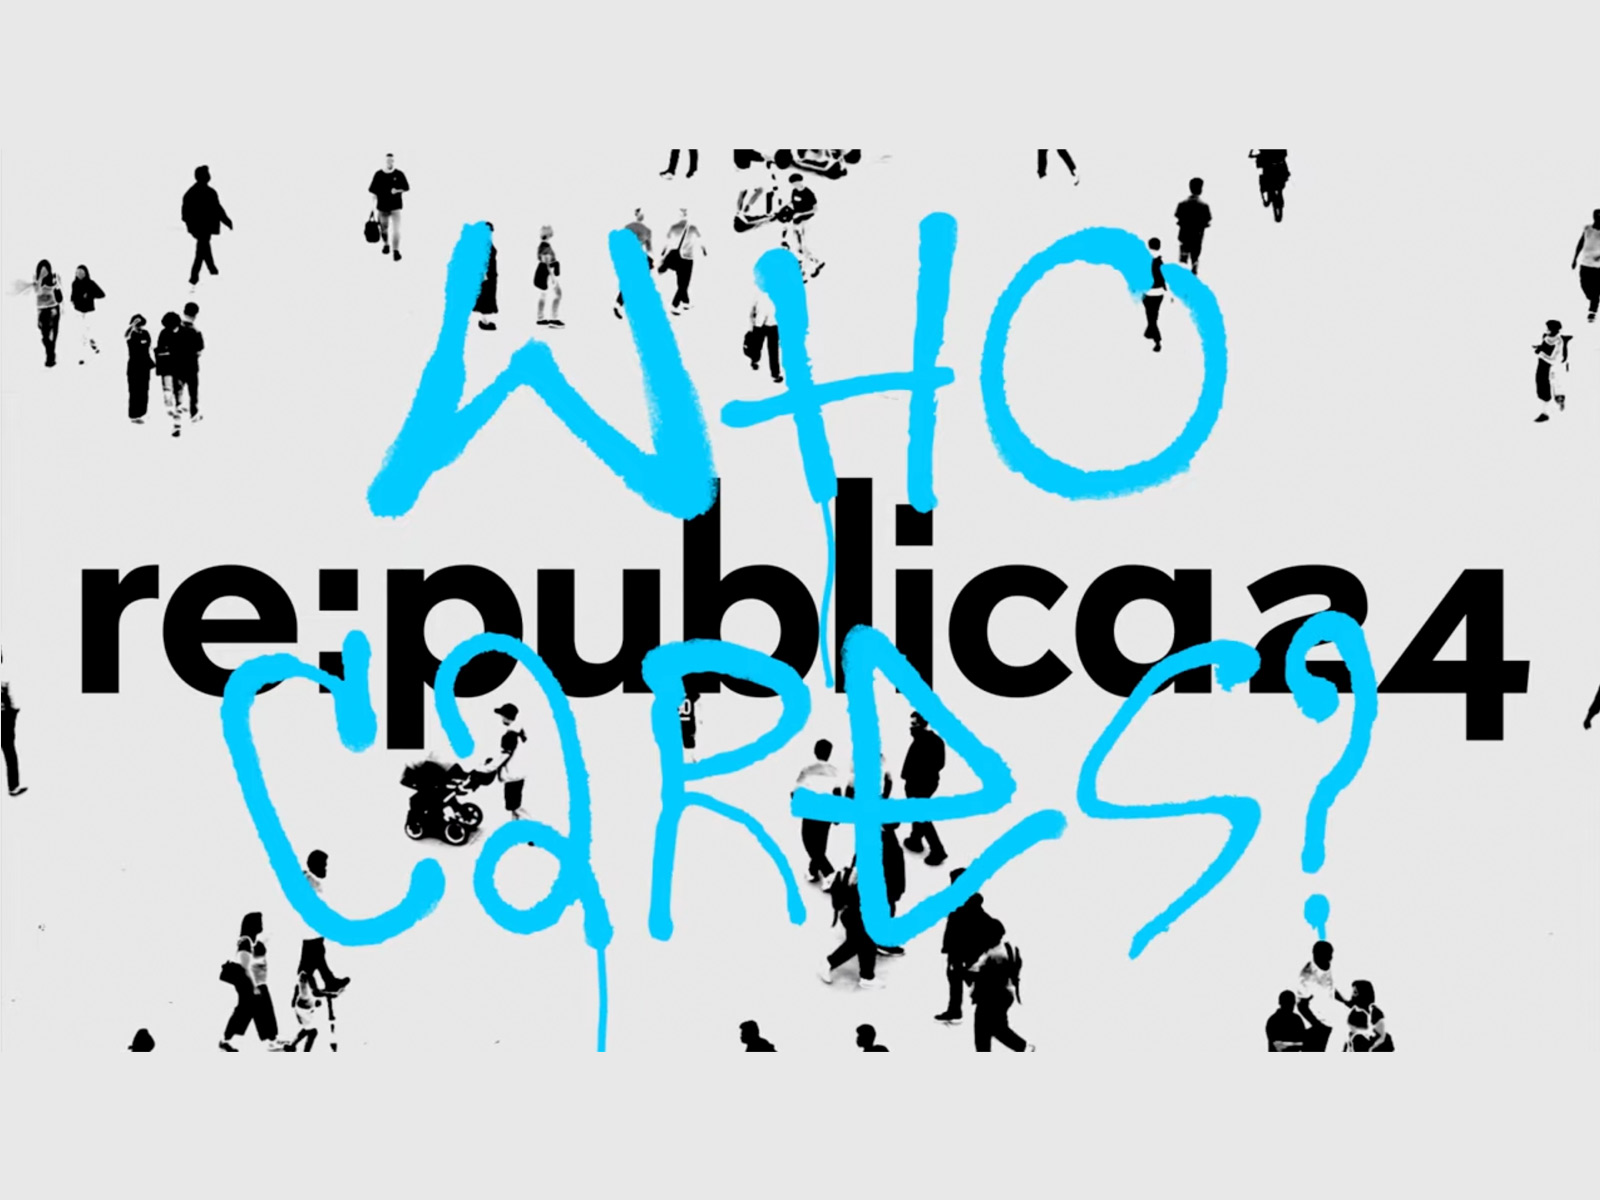 republica 24 - Verloren auf Plattformen